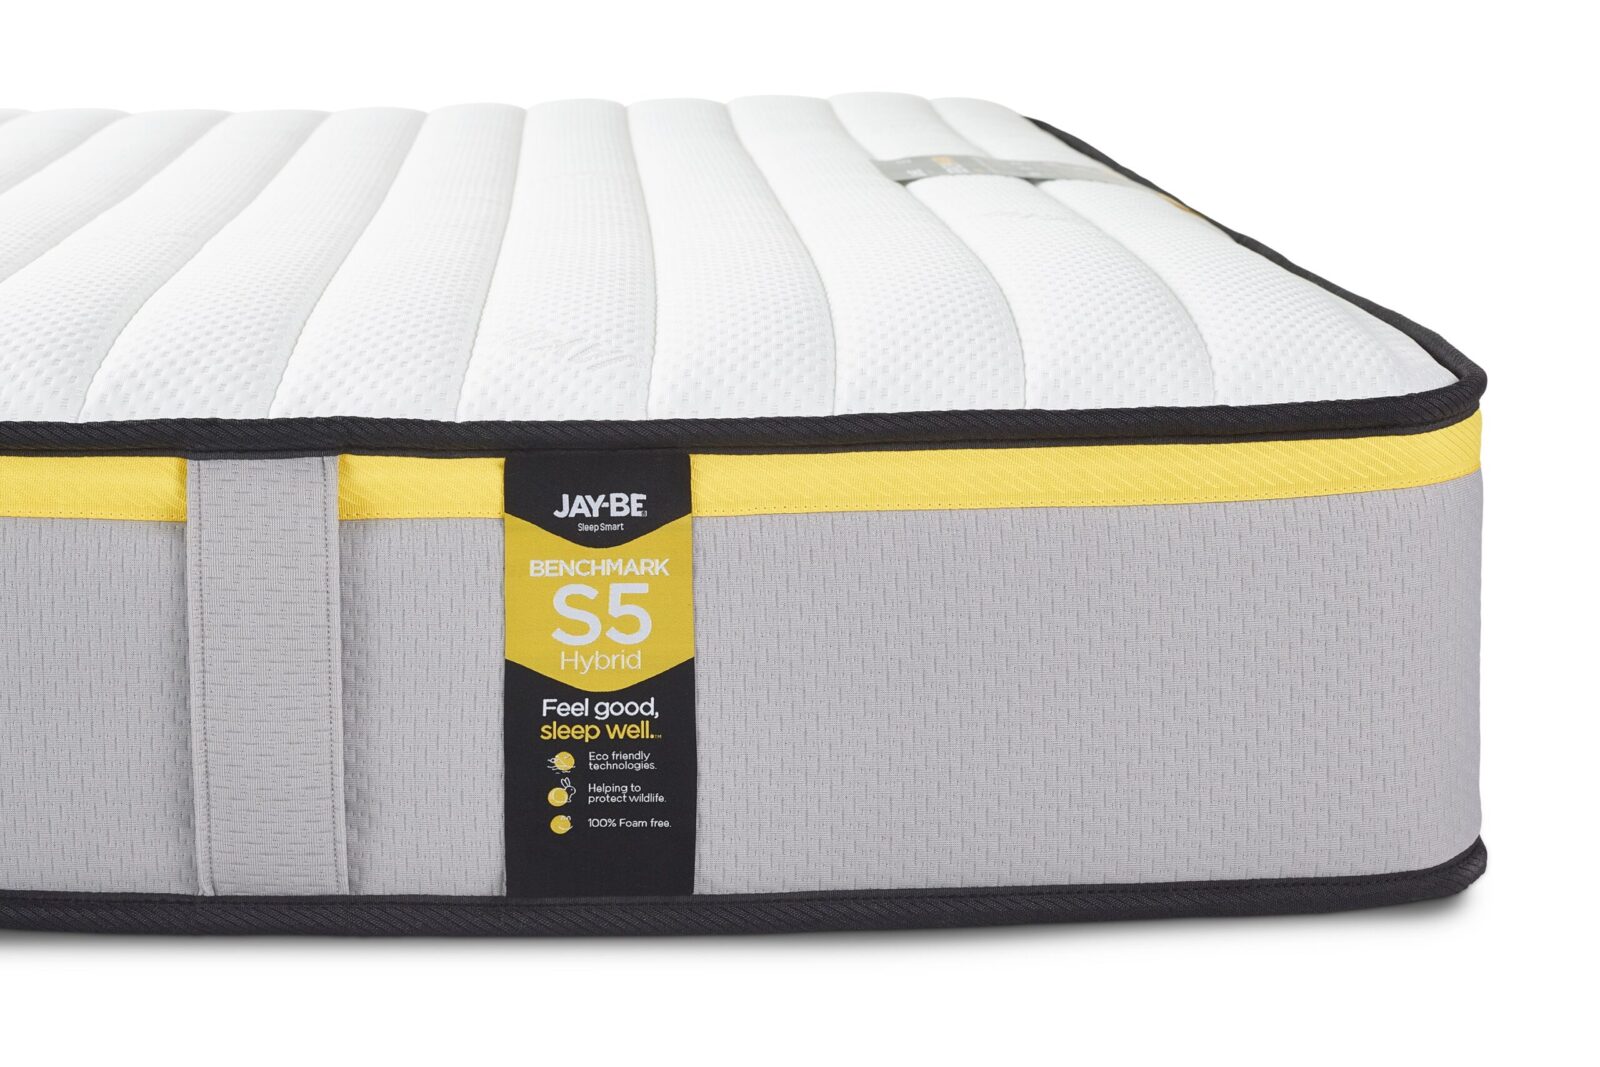 jay-be benchmark s5 hybrid pocket spring mattress